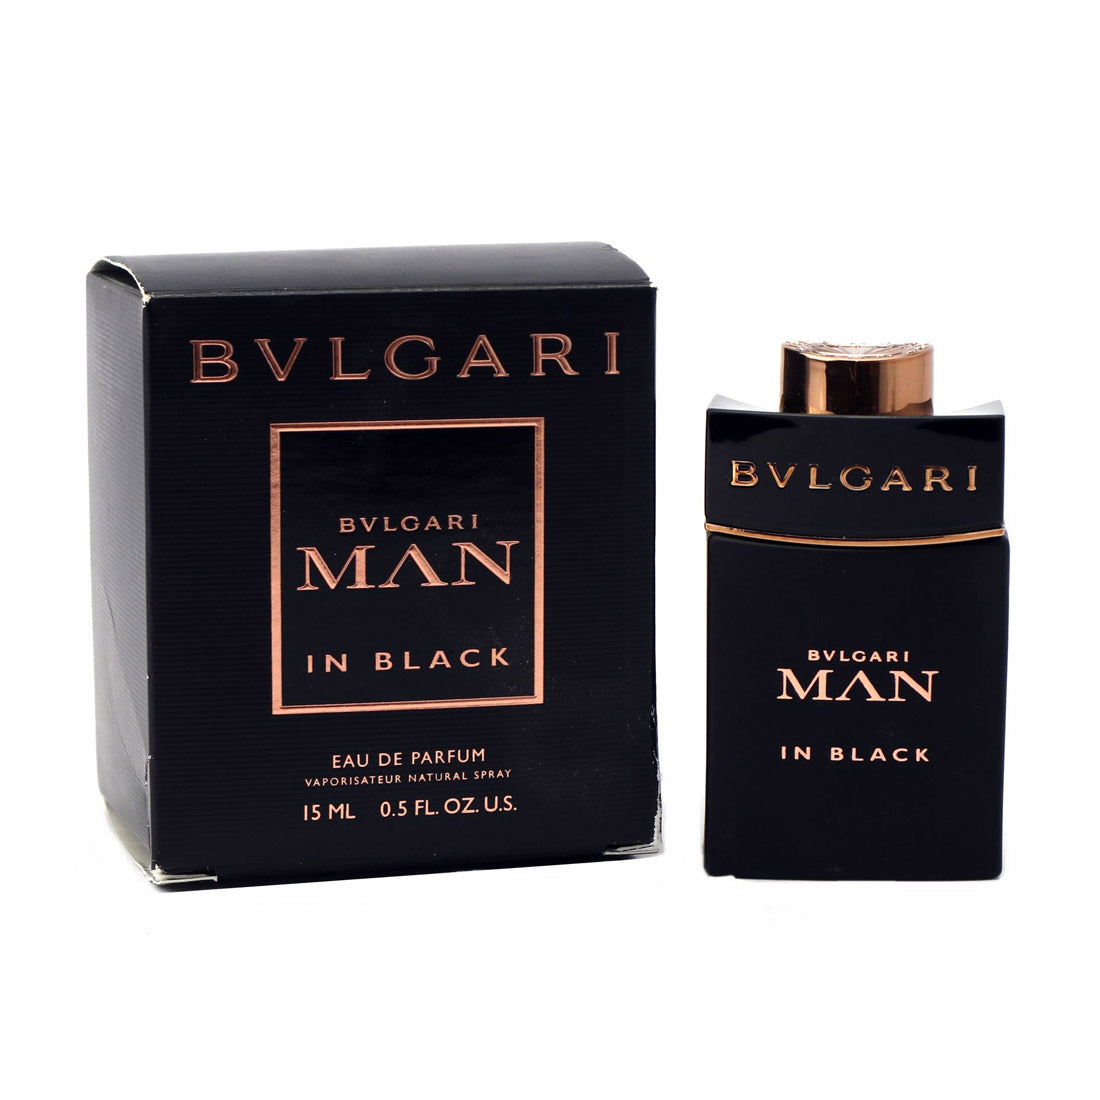 Bvlgari Man in Black EDP For Men 15ML MINIATURE SPRAY